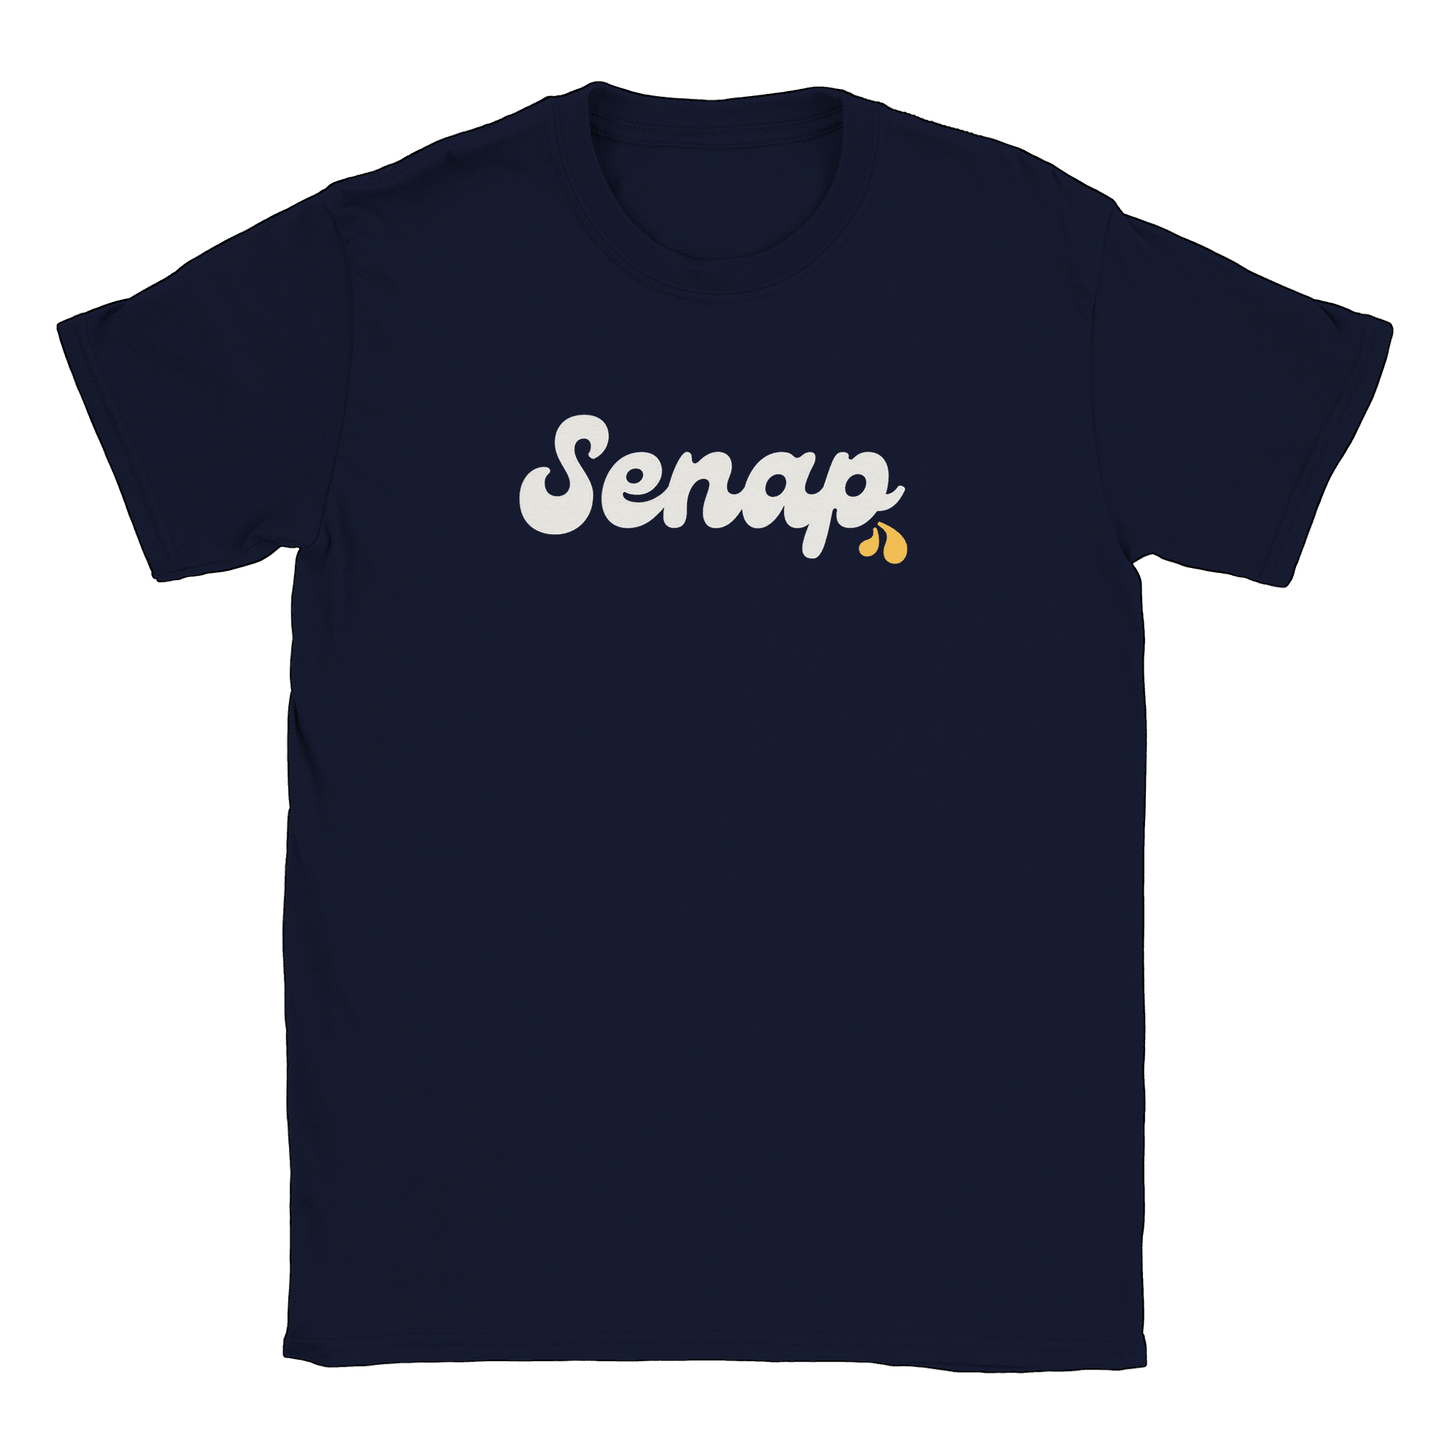 Senap - T-shirt Navy